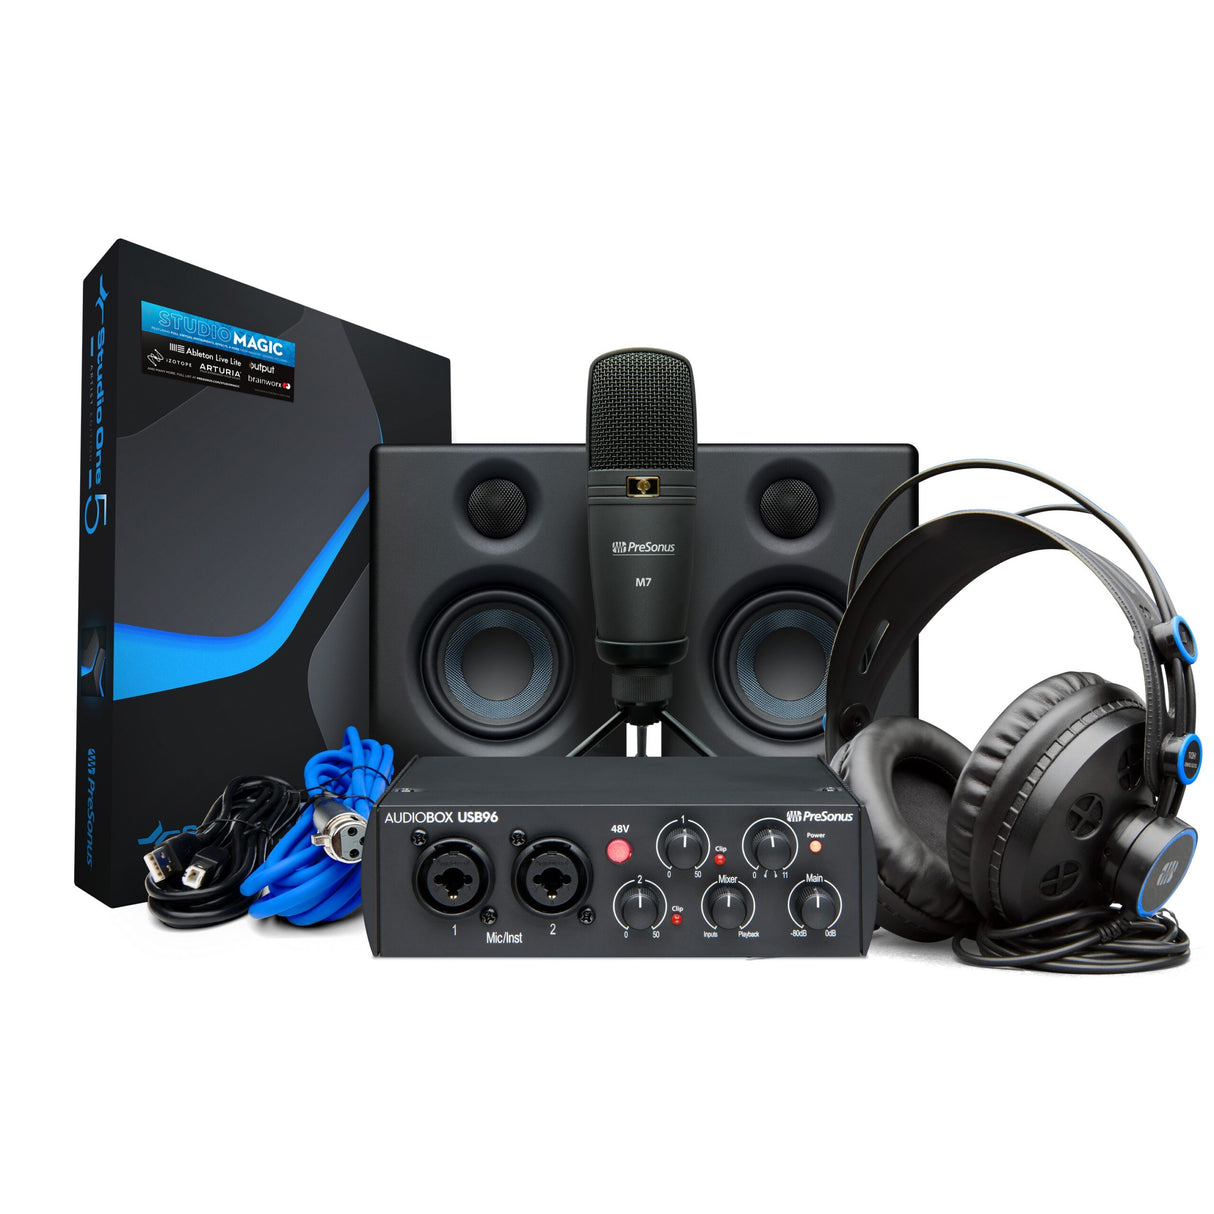 PreSonus AudioBox 25th 96k Studio Ultimate Complete Hardware/Software Recording Kit